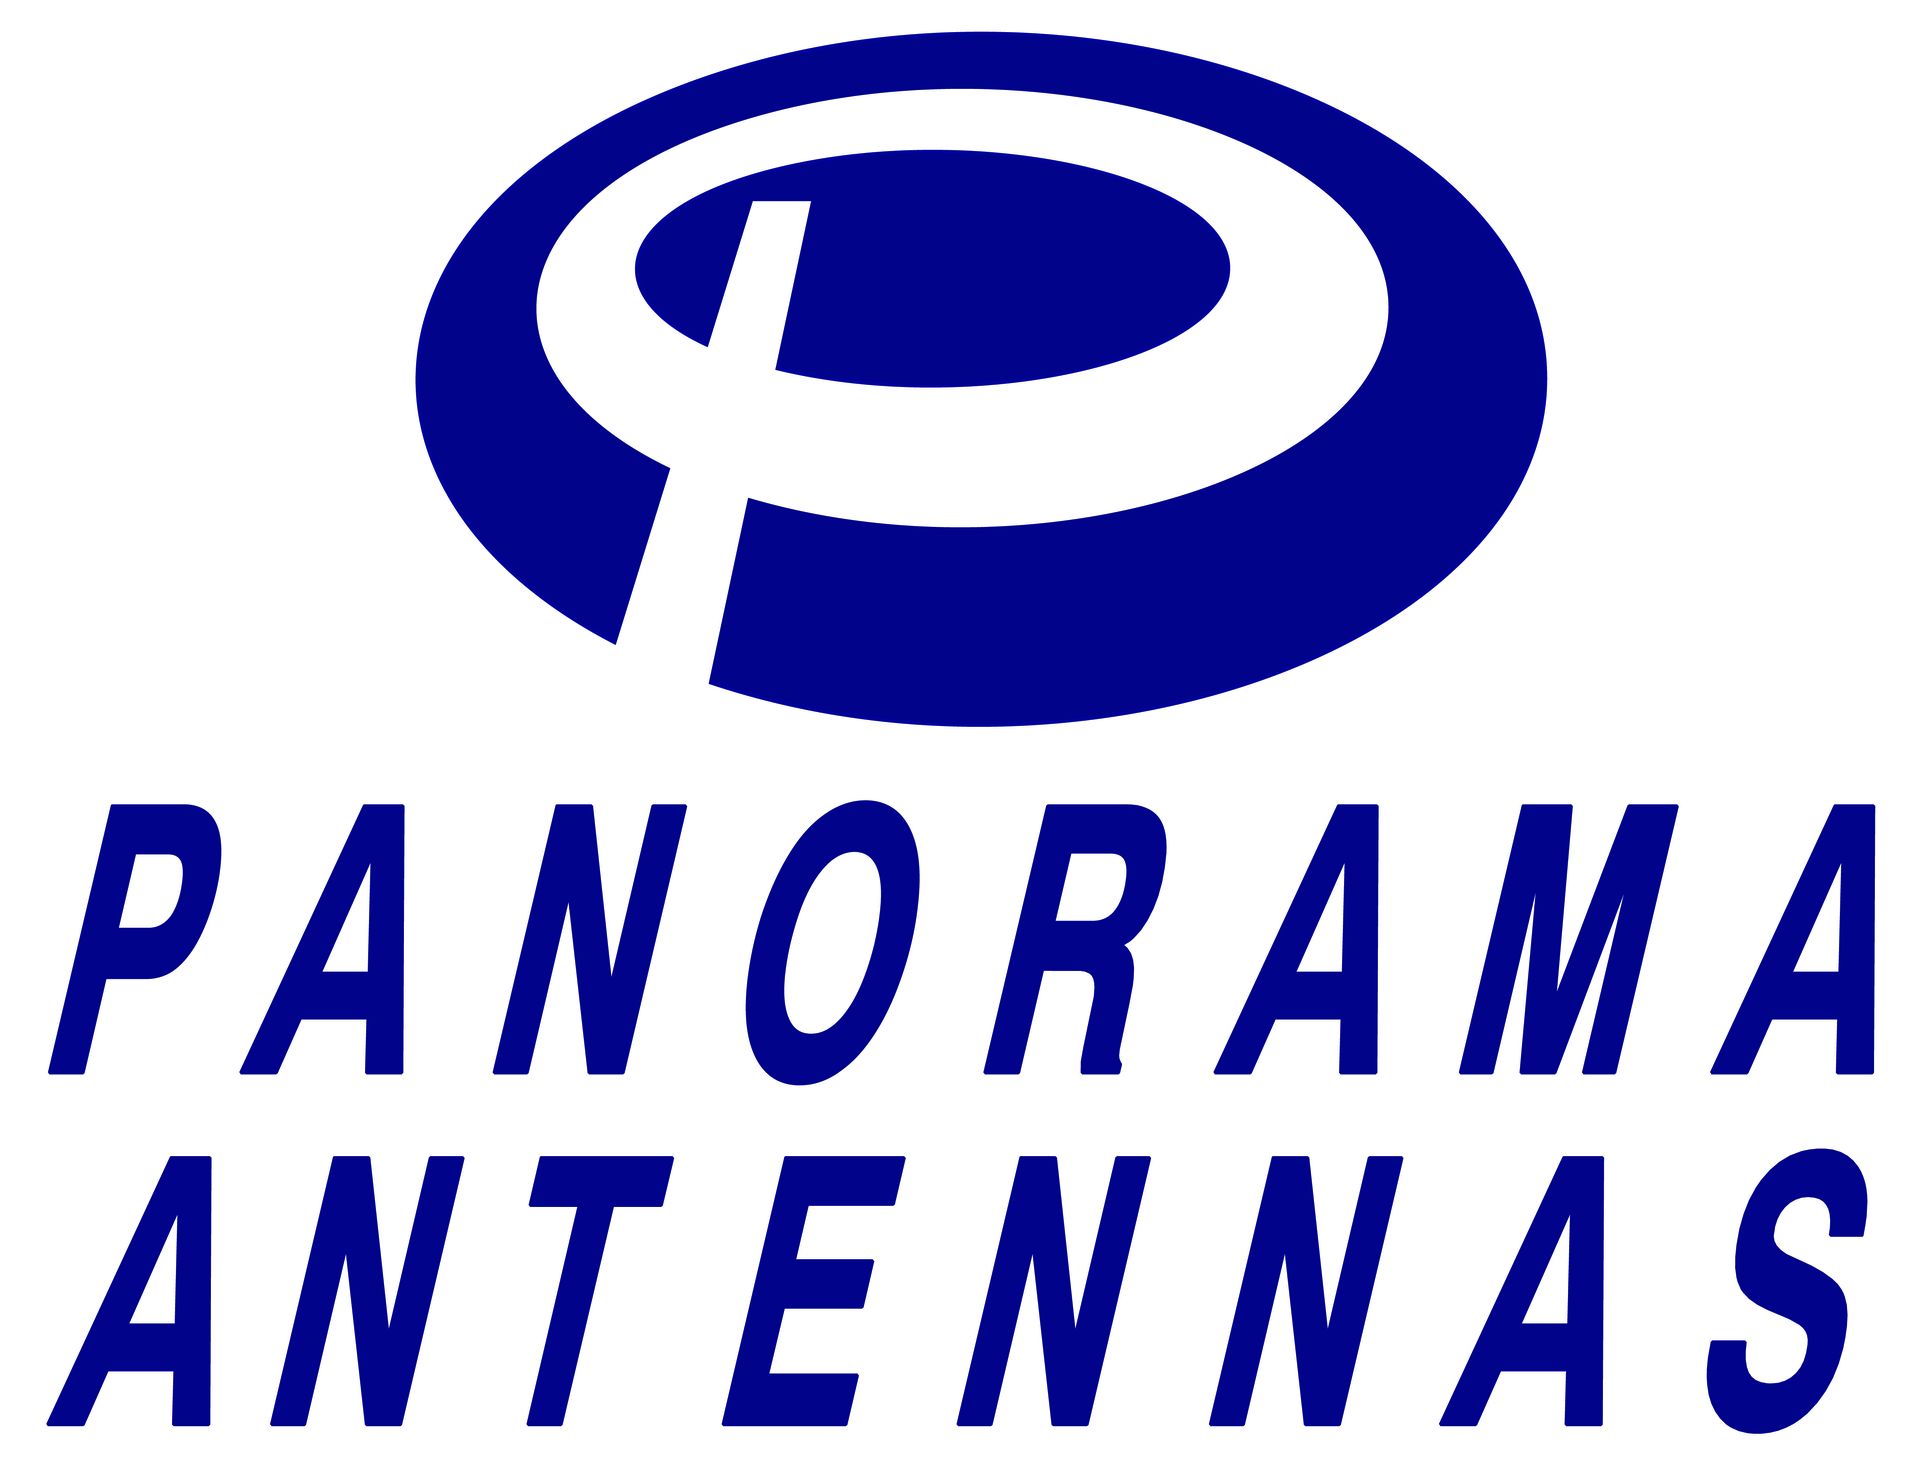 Brand: Panorama